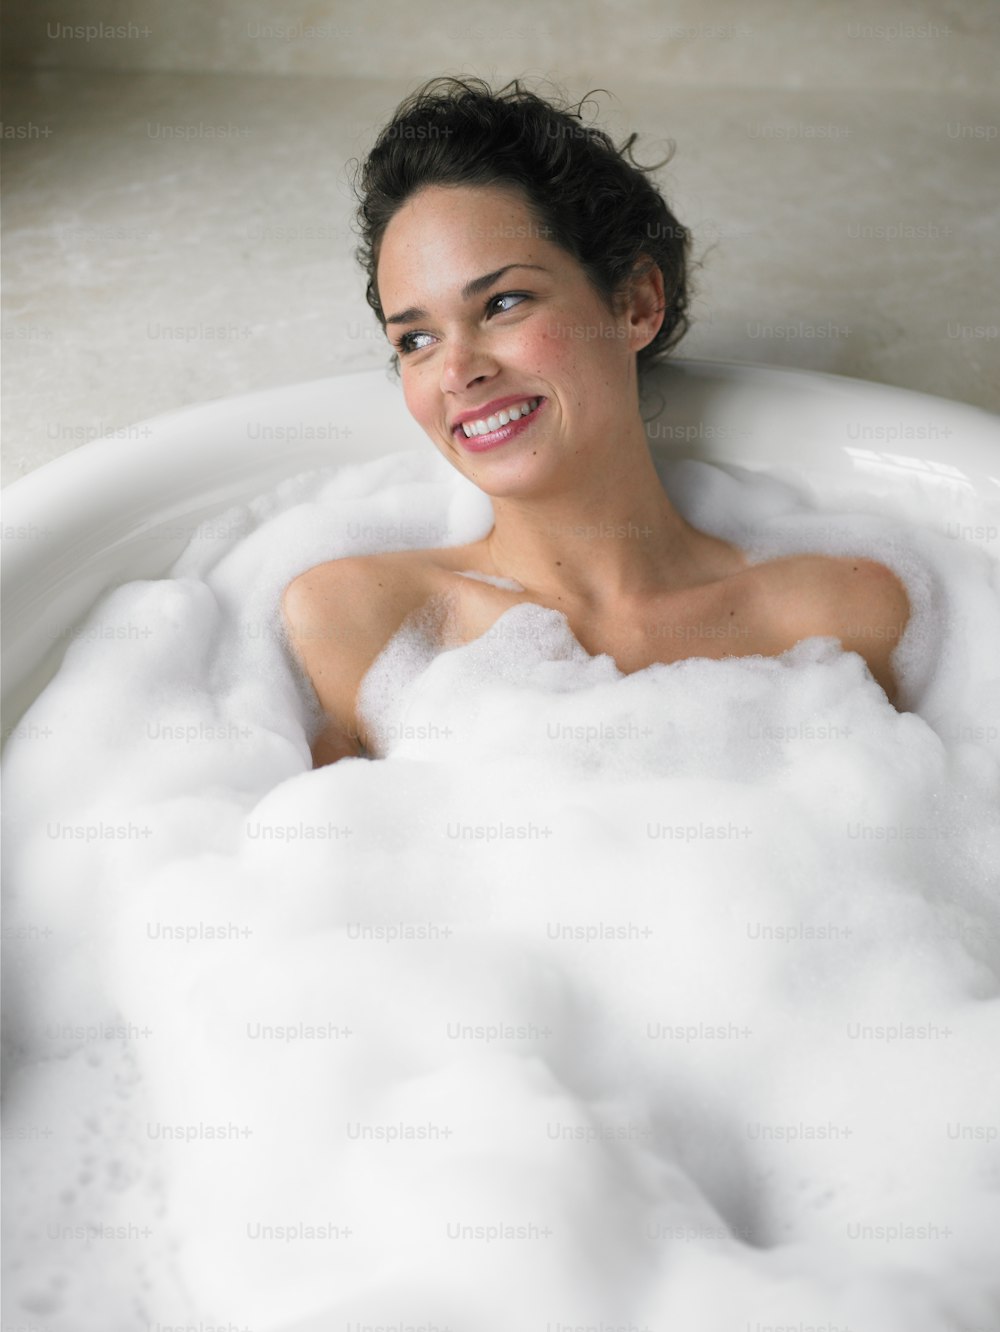 a woman in a bathtub full of foam